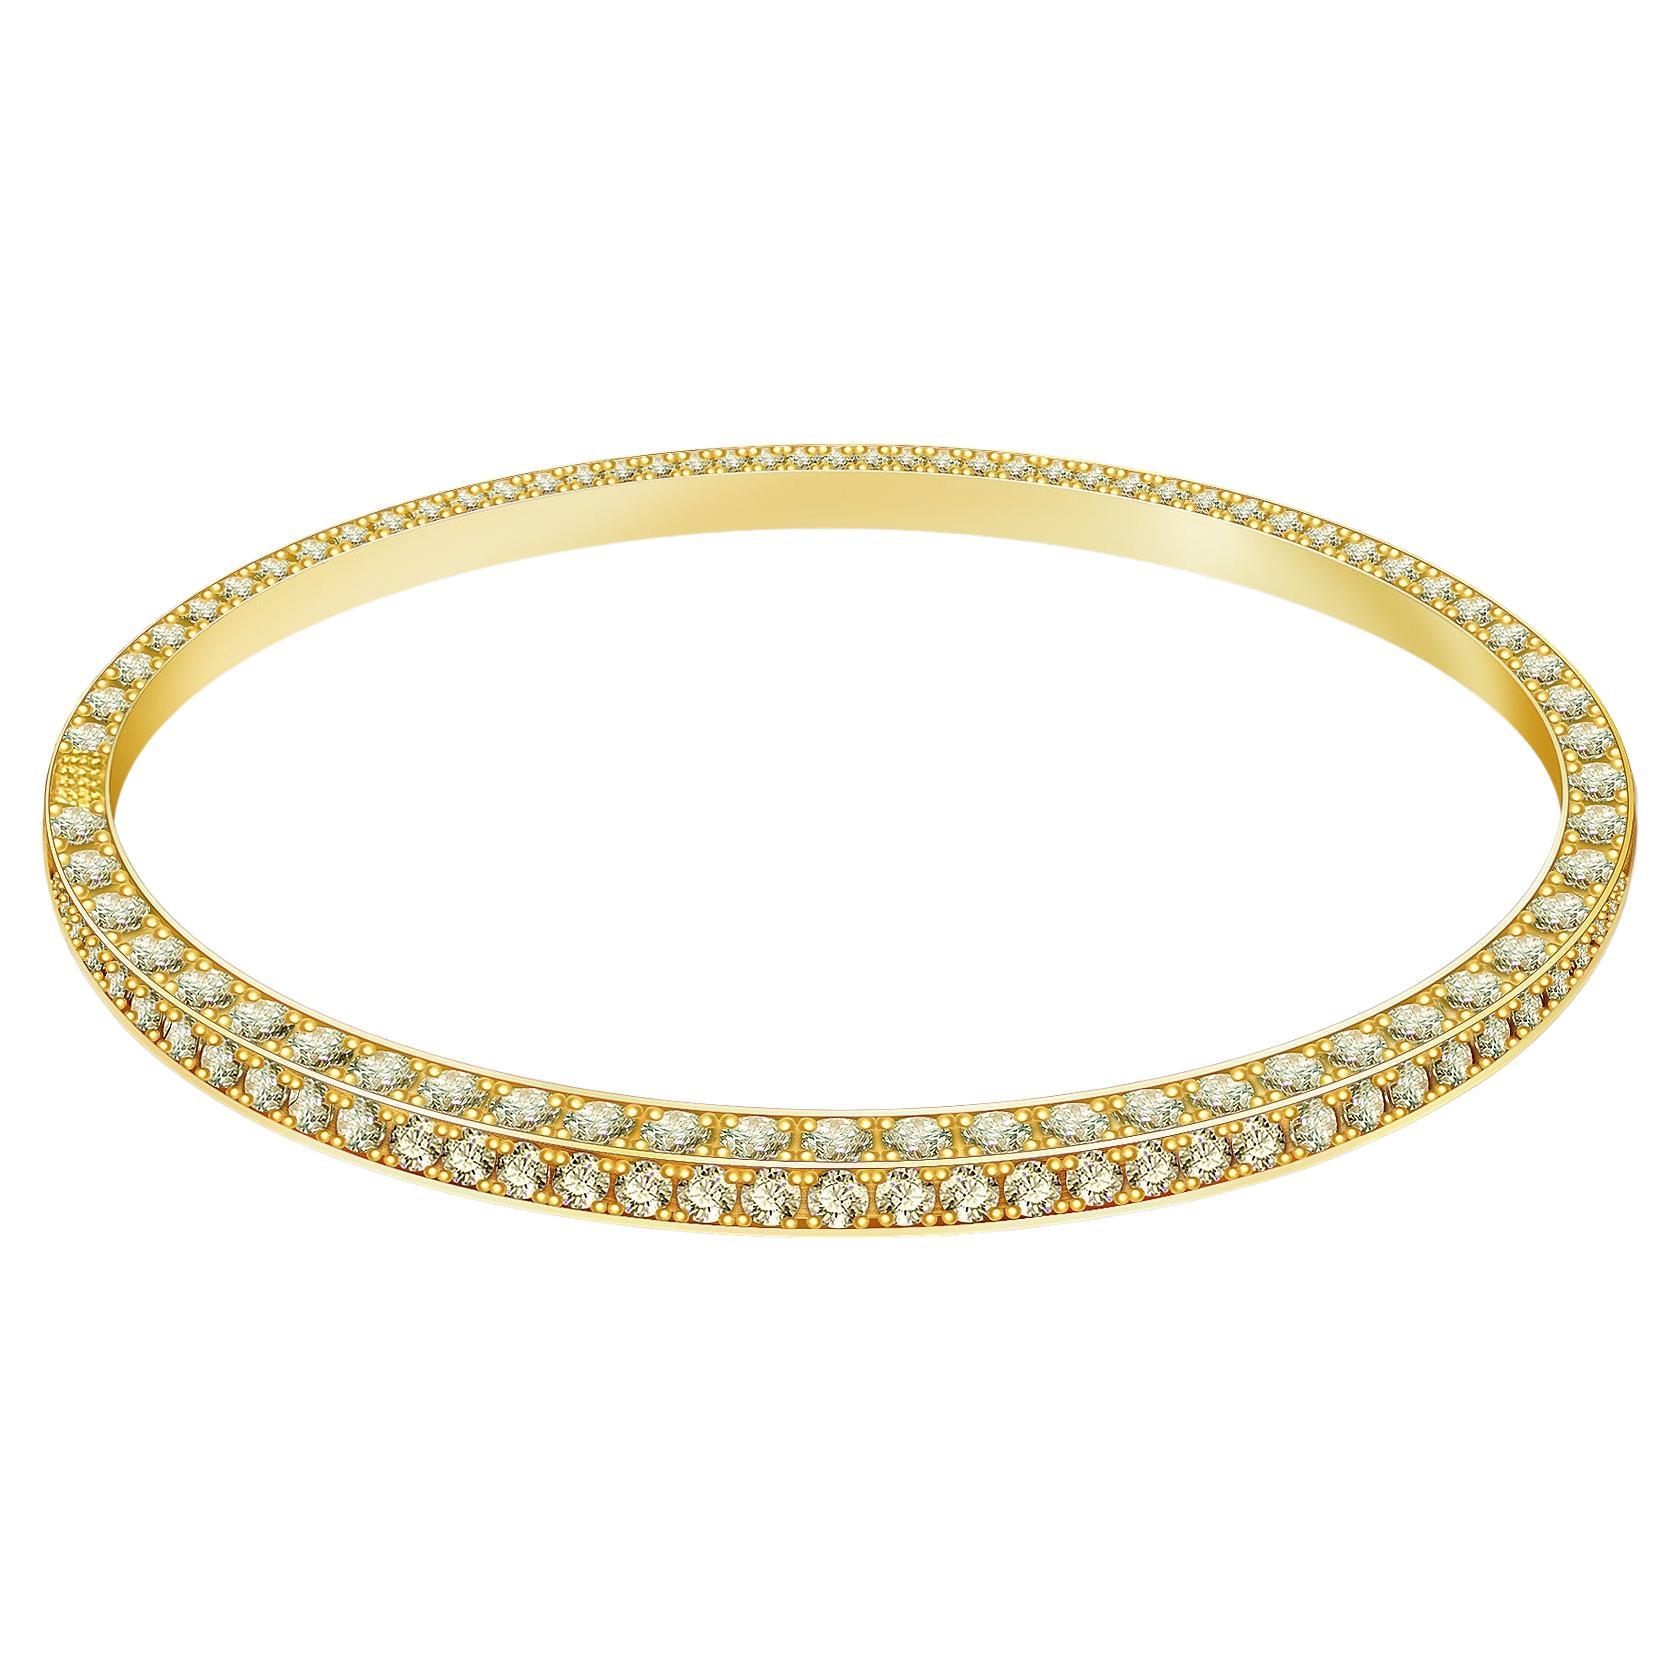 19 Carat Diamonds 18 Karat Yellow Gold Bangle "Art Deco" Collection by D&A For Sale